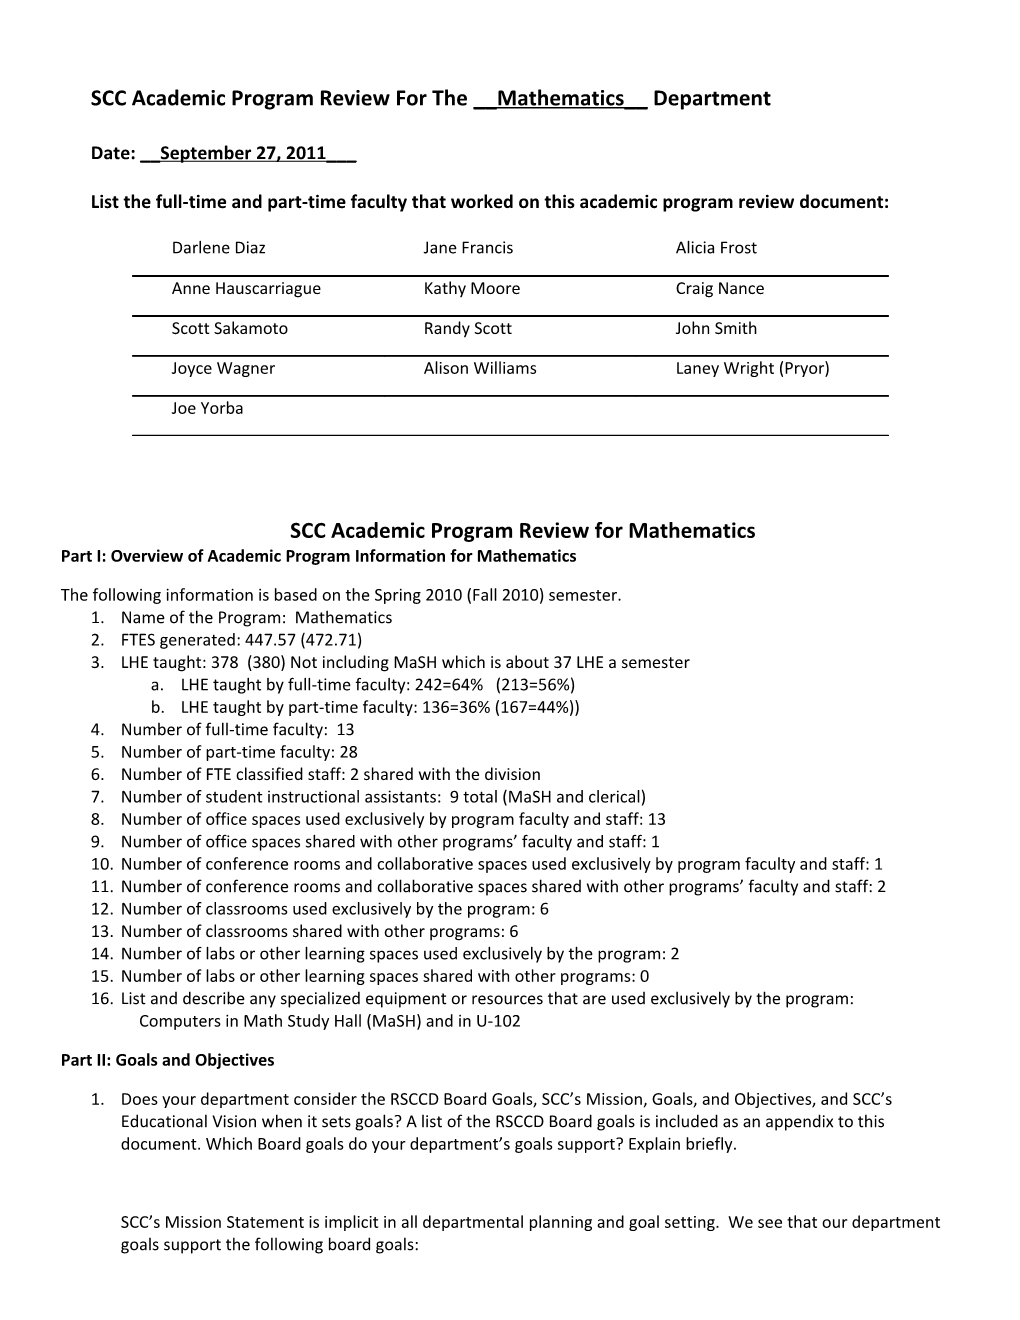 SCC Academic Program Review for the __Mathematics__ Department